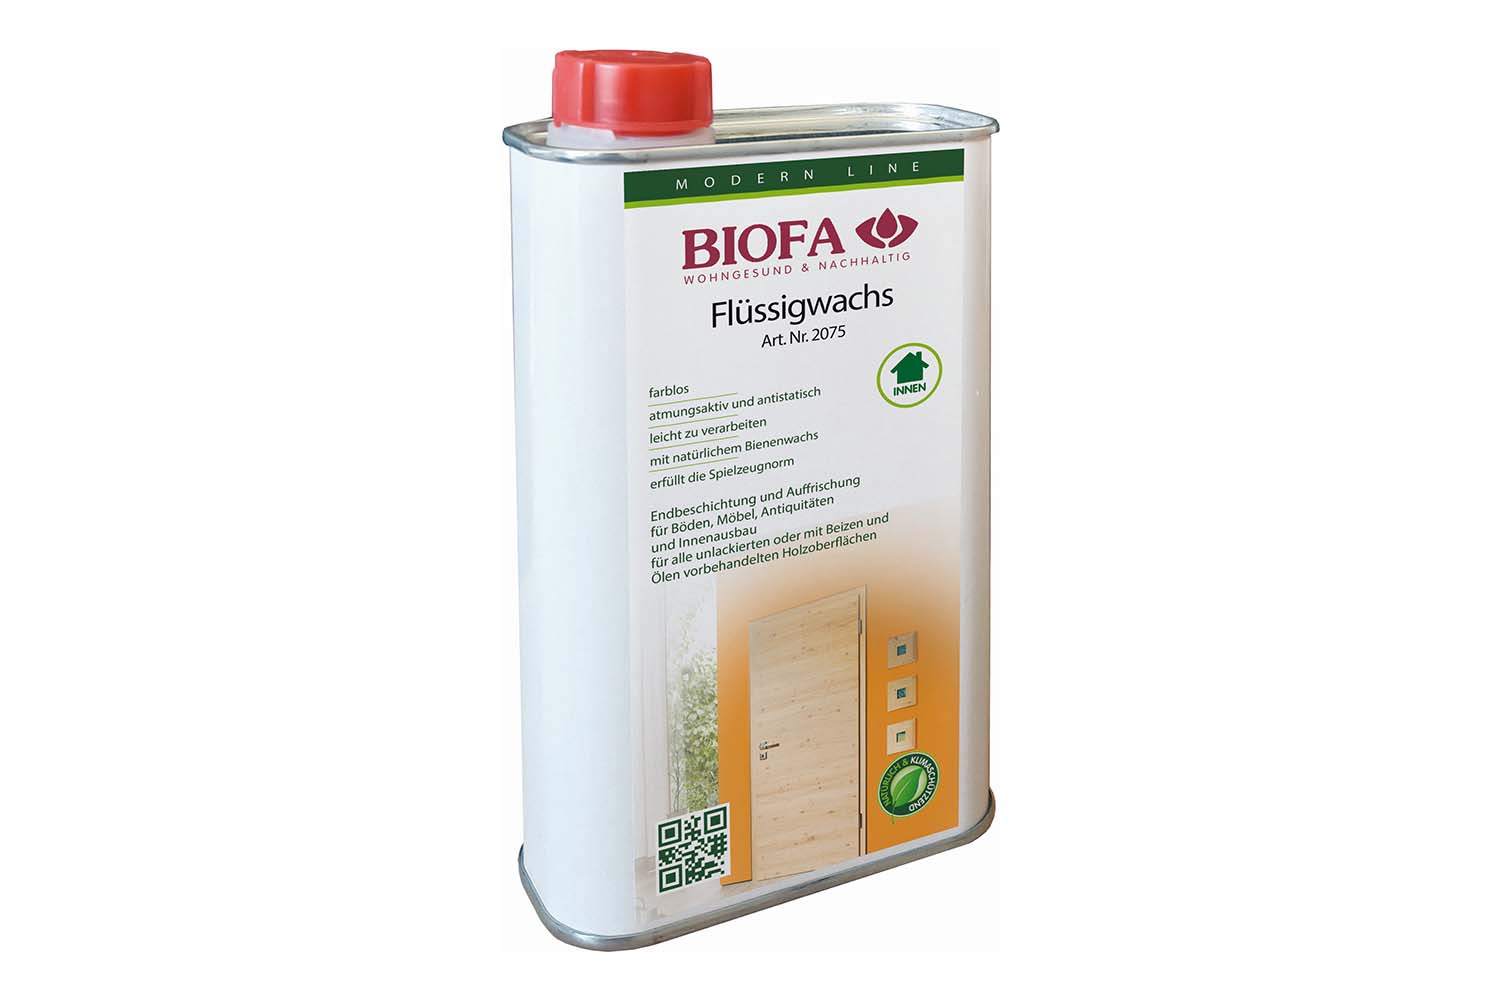 Biofa Flüssigwachs